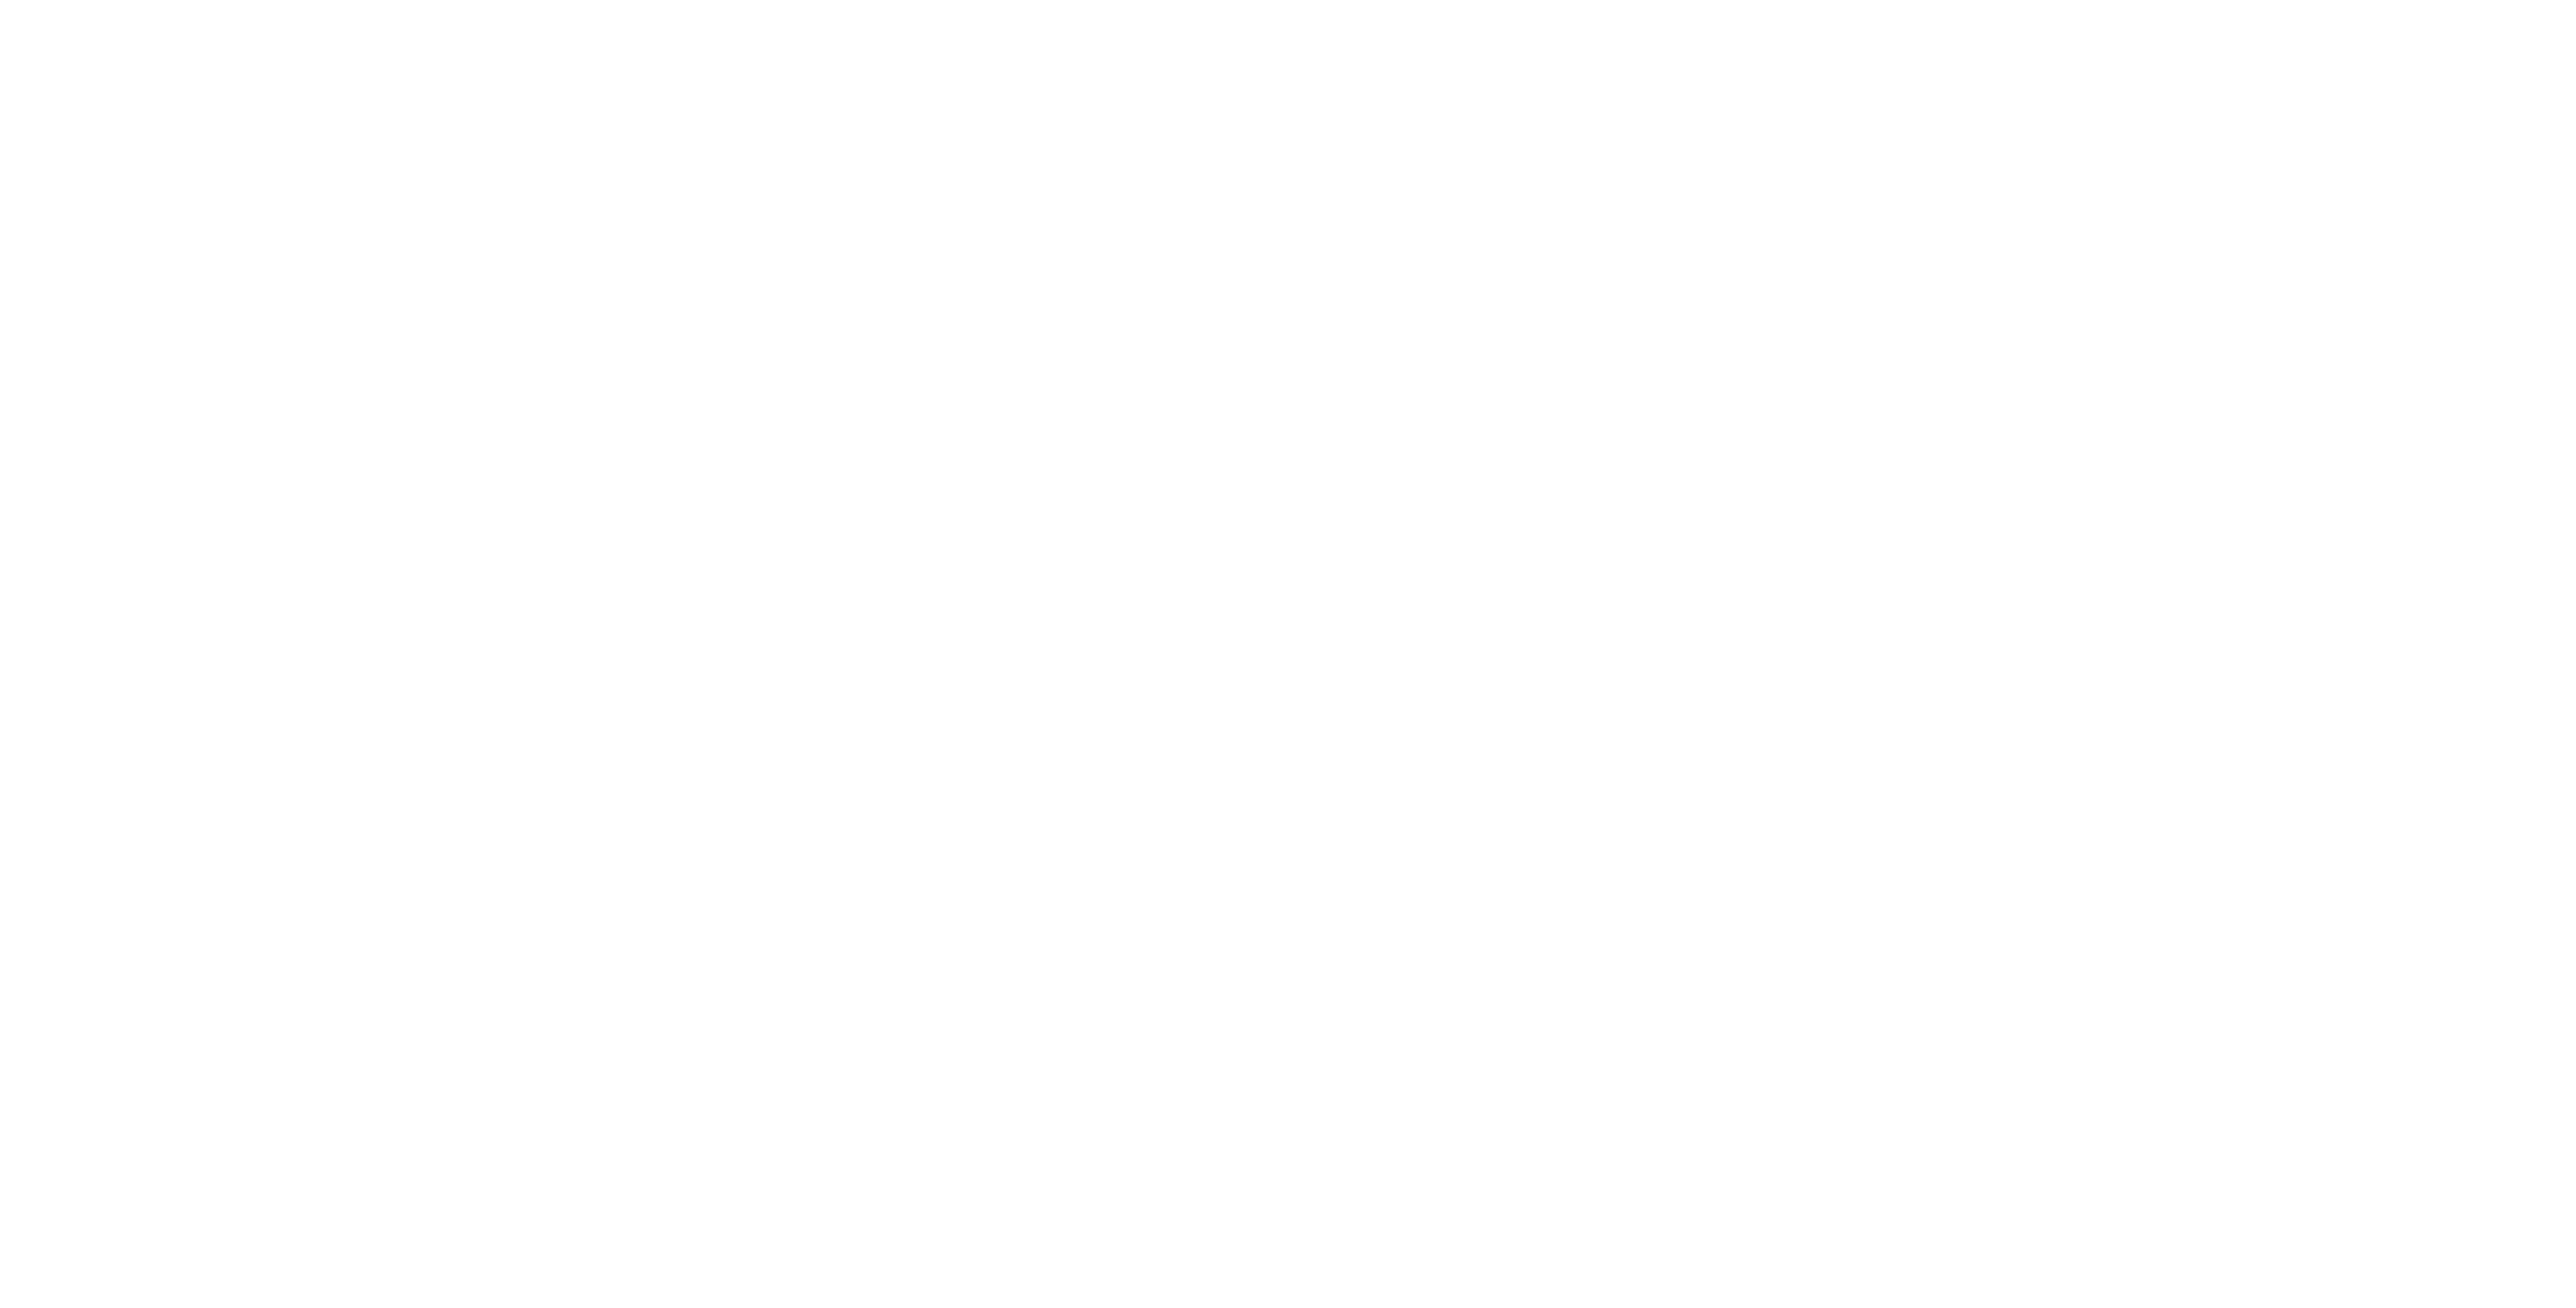 Visa express online